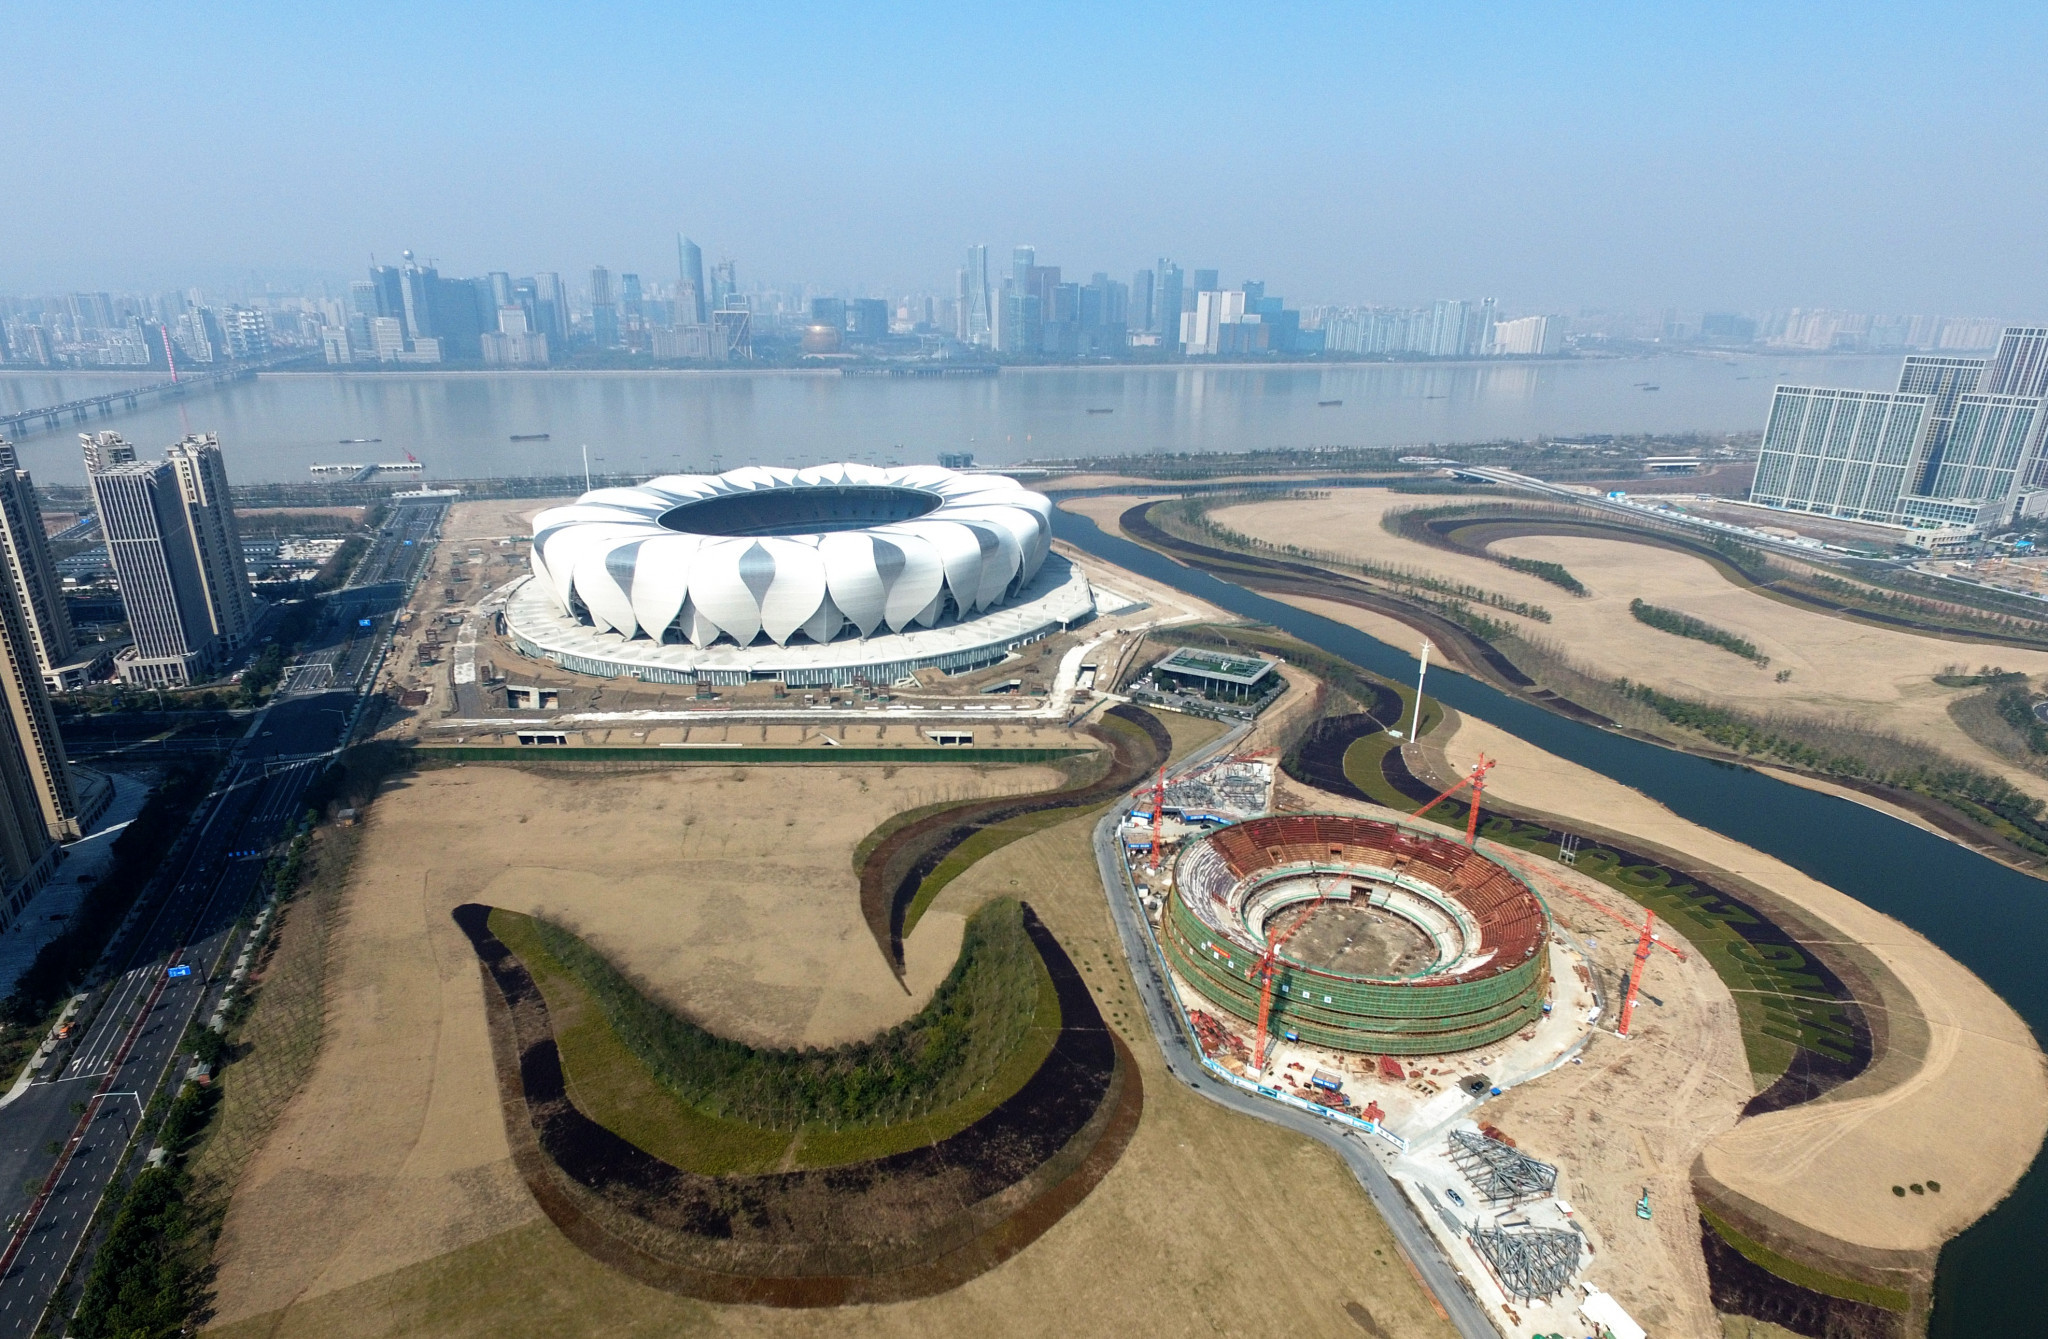 Hangzhou 2022 stadium to serve as finish line for city's marathon